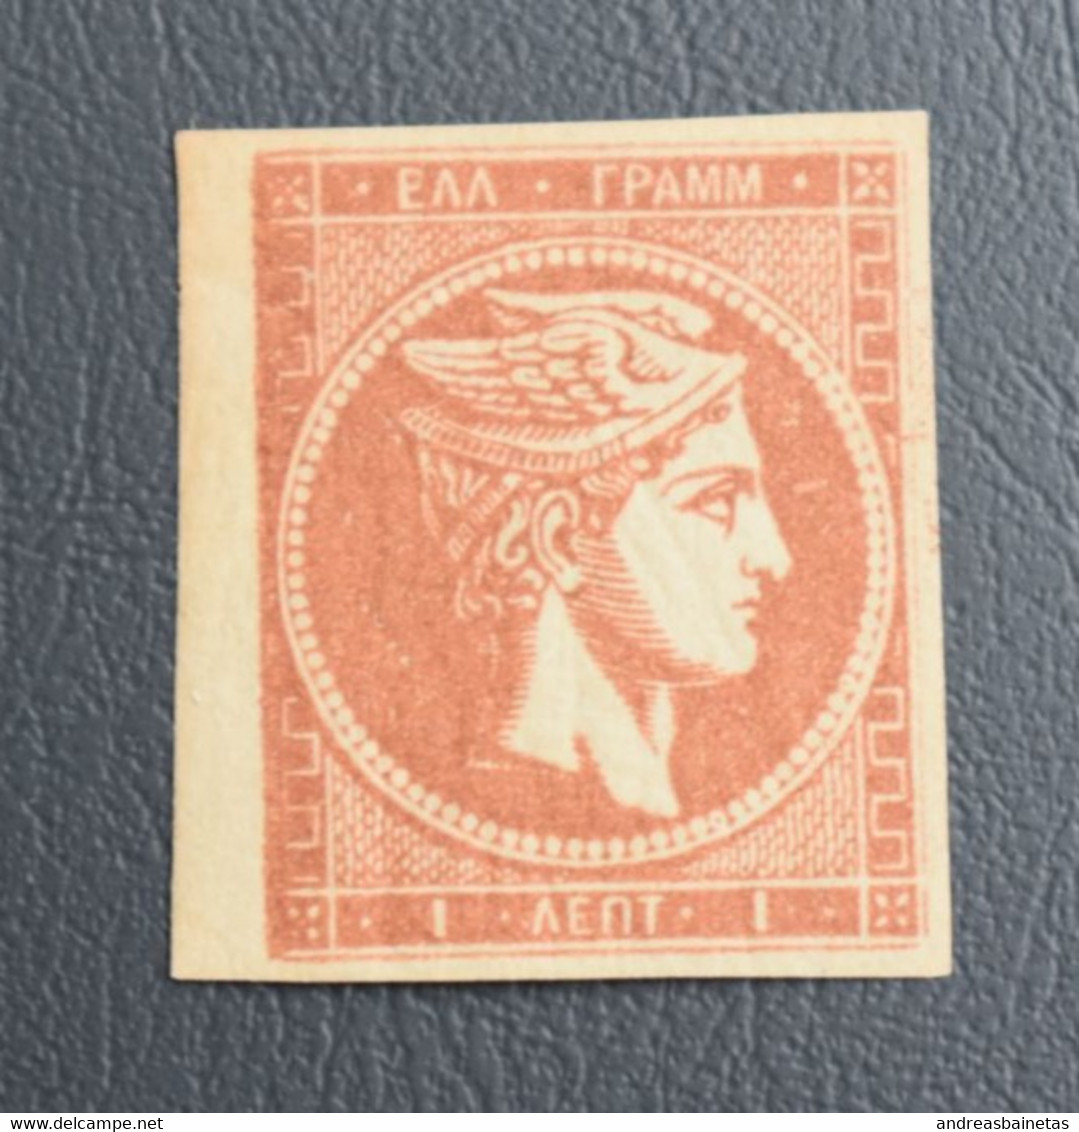 Stamps GREECE Large  Hermes Heads 1 Lepton LH  1880-1886 - Ongebruikt